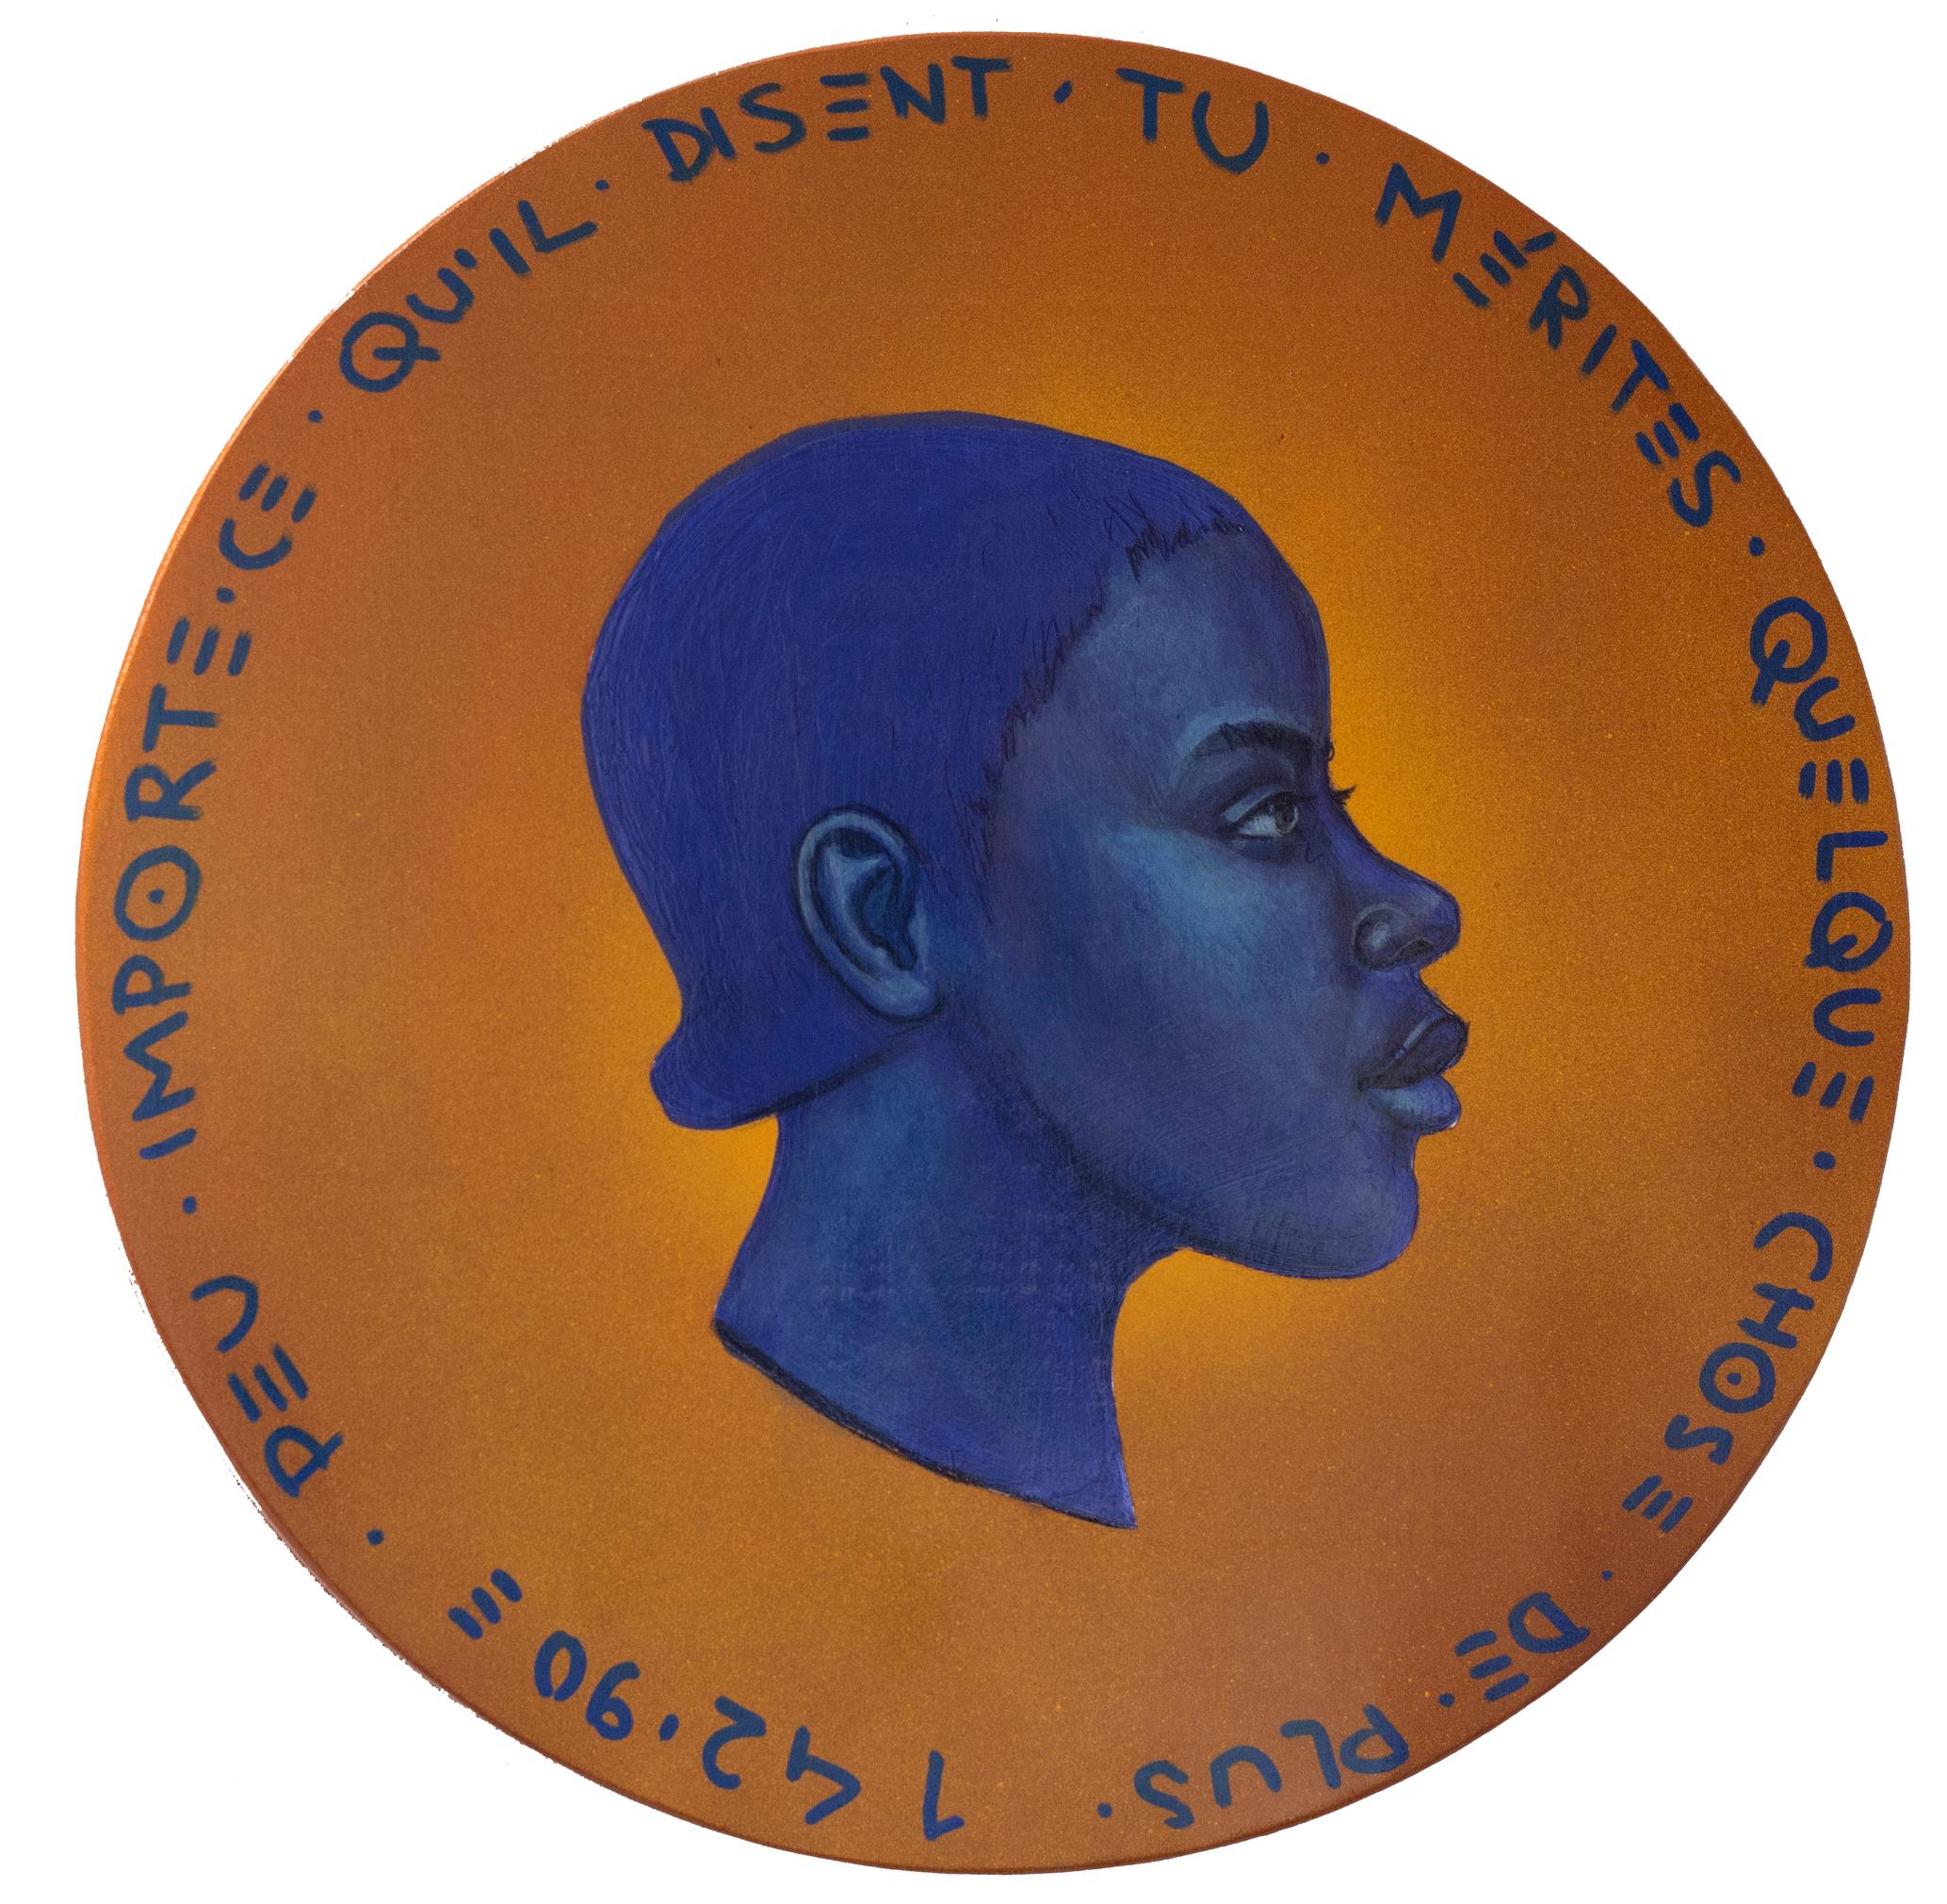 Natasha Lelenco Portrait Painting - Contemporary Pop Surrealist Portrait on a Wooden Coin. Migrant.  "Currency #202"